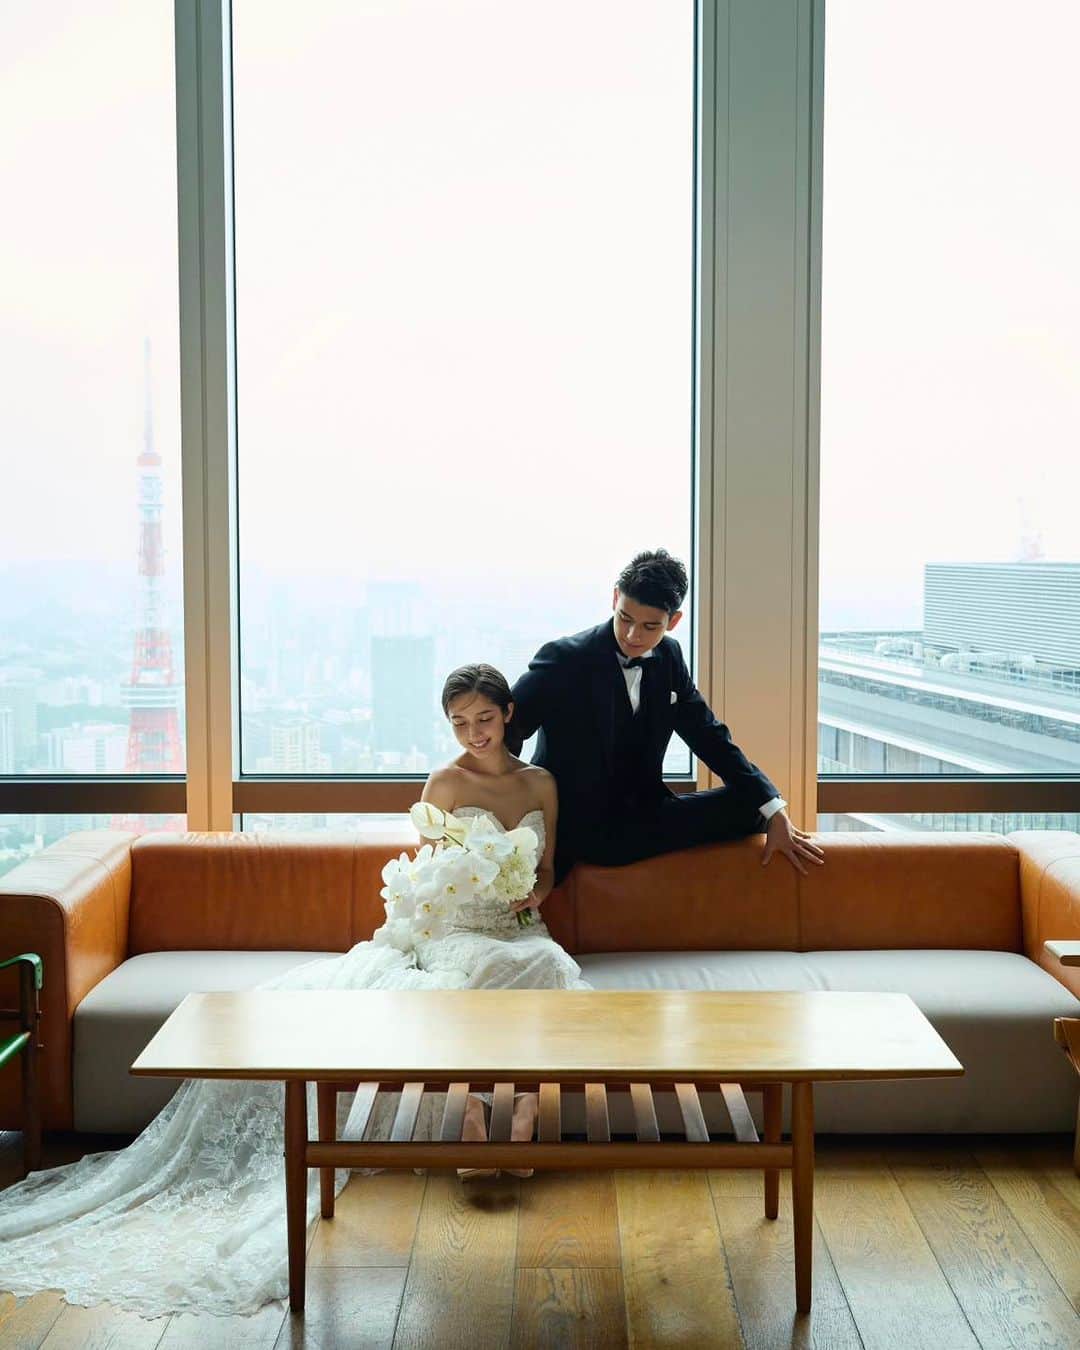 Andaz Tokyo アンダーズ 東京のインスタグラム：「流行や形式にとらわれず、自分らしいこだわりに溢れた一日を。まるで我が家にゲストを招くような、親密な時間を👰 アンダーズ 東京のパーソナルスタイルウエディングだからこそ叶えられる、あなたの結婚式があります。  @andaztokyowedding では、アンダーズ 東京でご婚礼をいただいたお客様のウエディングフォトをご覧いただけます📷  Plan your perfect wedding day curated with your own personal touches. An intimate time as if you were inviting your guests to your home. Andaz Tokyo personalized weddings truly makes your wishes come true.  Visit @andaztokyowedding to view more photos of weddings held at Andaz Tokyo📷.  #ホテルウエディング #ラグジュアリーホテル #ライフスタイルホテル #虎ノ門ヒルズ #アンダーズ東京ウェディング #アンダーズ東京 #ウエディングフォト #アンダーズ花嫁 #tokyohotel #luxuryhotel #andaztokyowedding #toranomonhills  #andaztokyo #hotelwedding #weddingphotoideas #tokyo #japan #wedding #personalstyle」